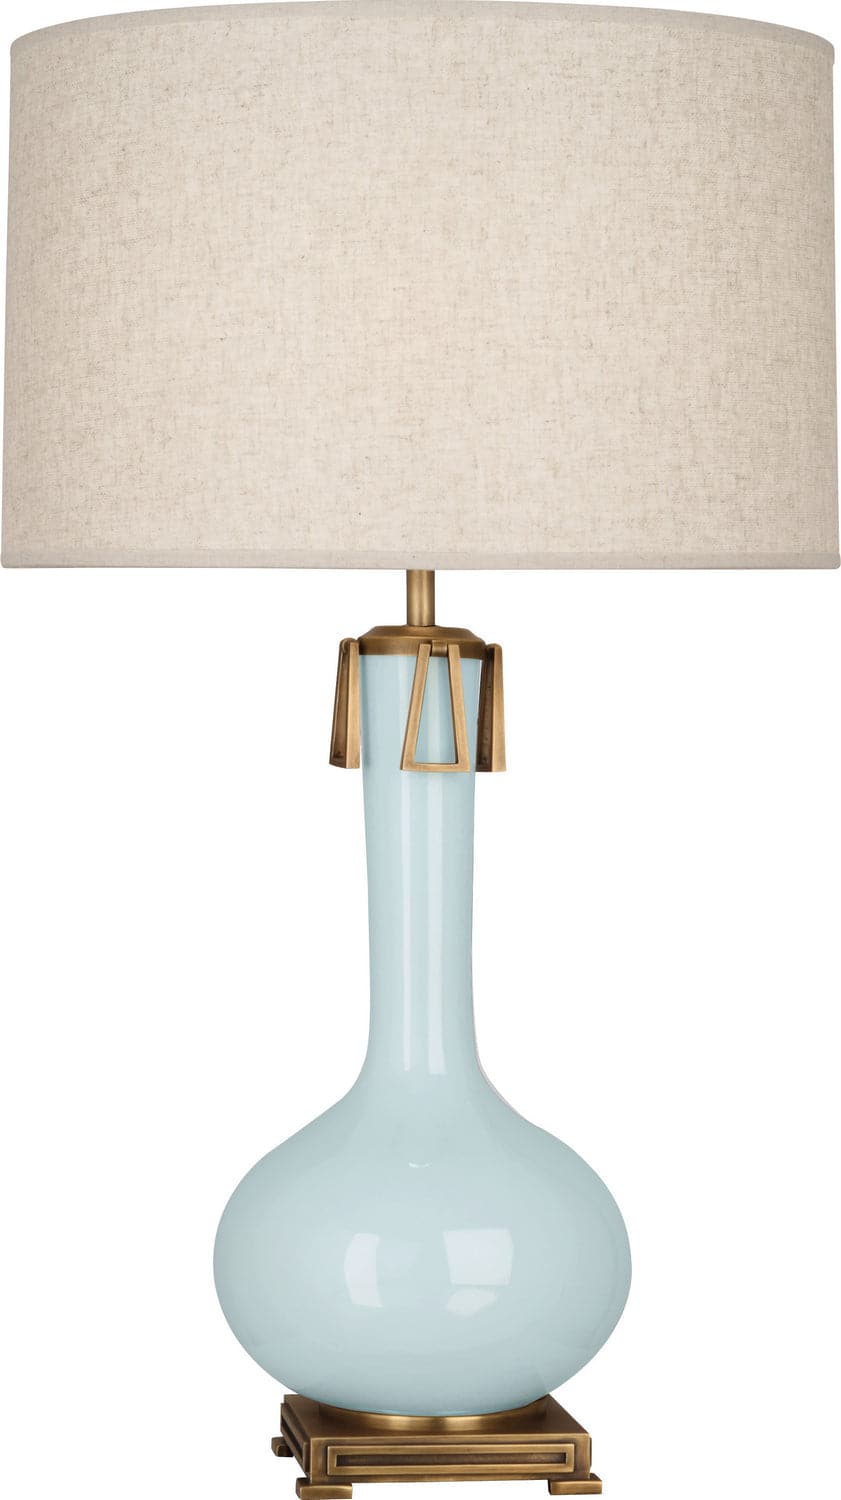 Robert Abbey - BB992 - One Light Table Lamp - Athena - Baby Blue Glazed w/Aged Brass